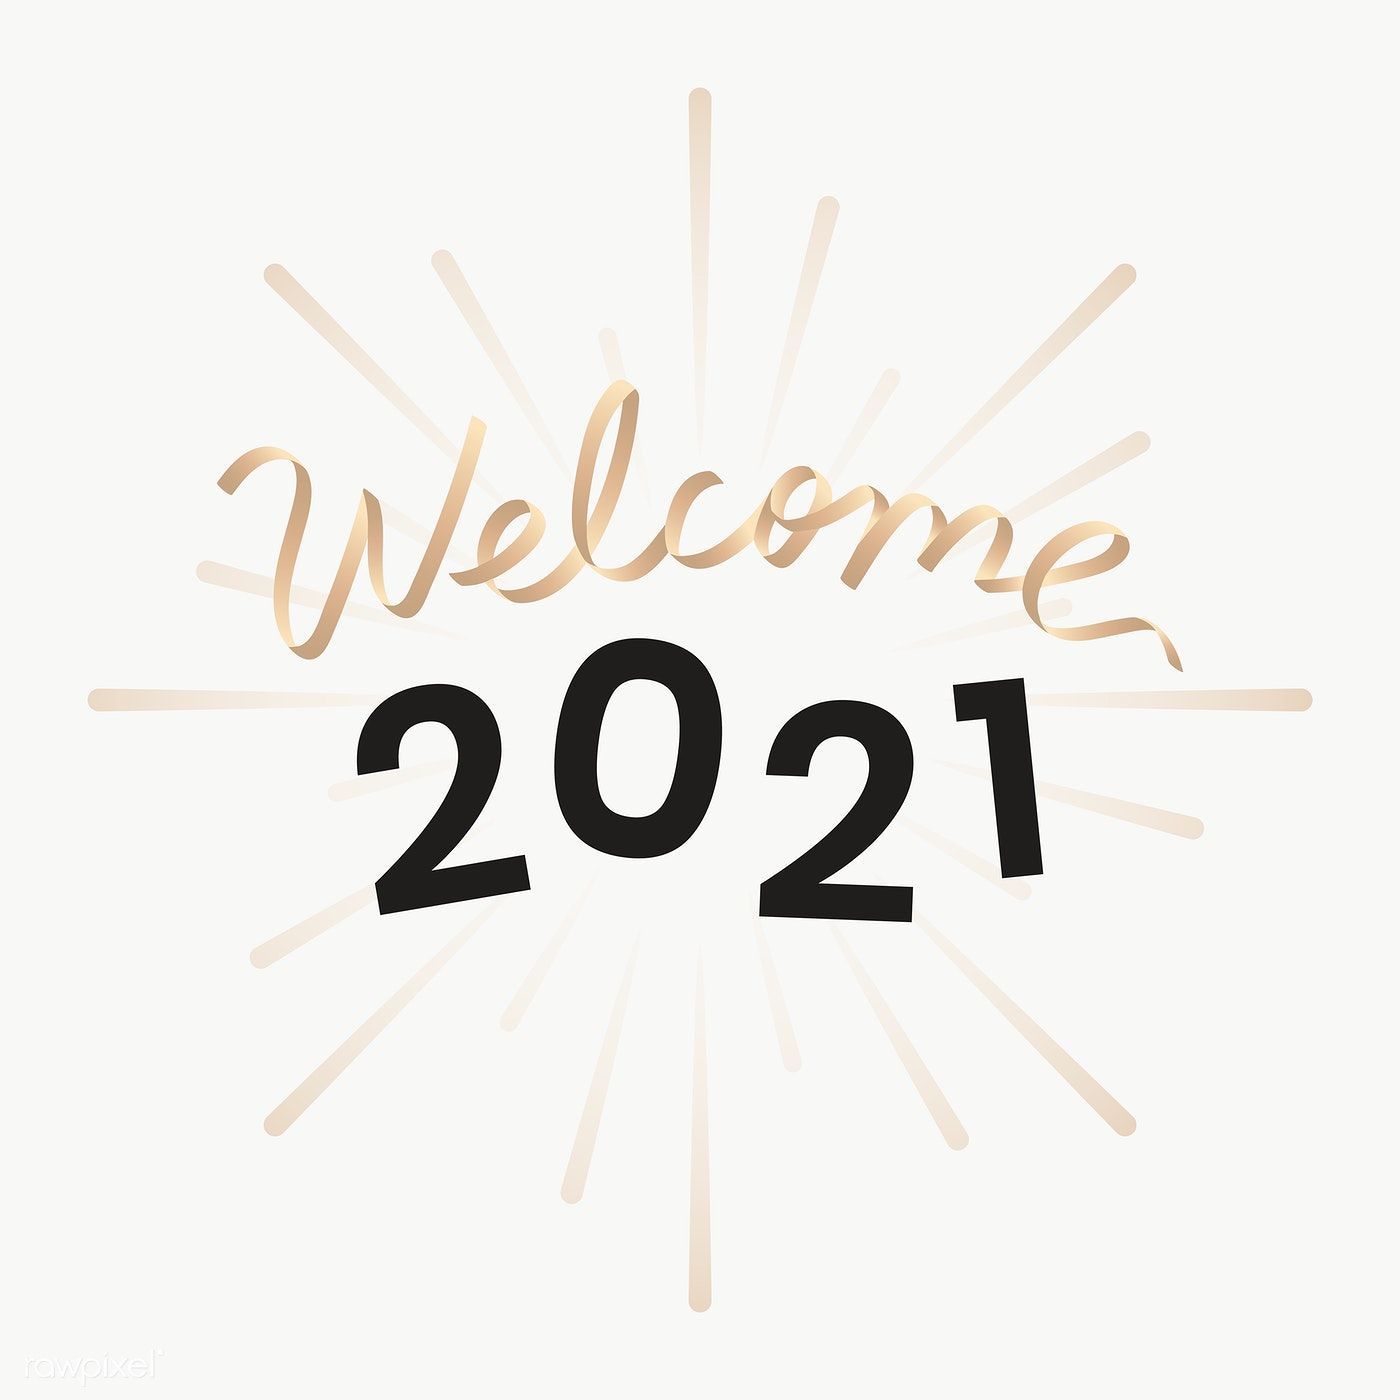 Golden welcome 2021 transparent png. free image / NingZk V. Stock image free, Image fun, Sale poster